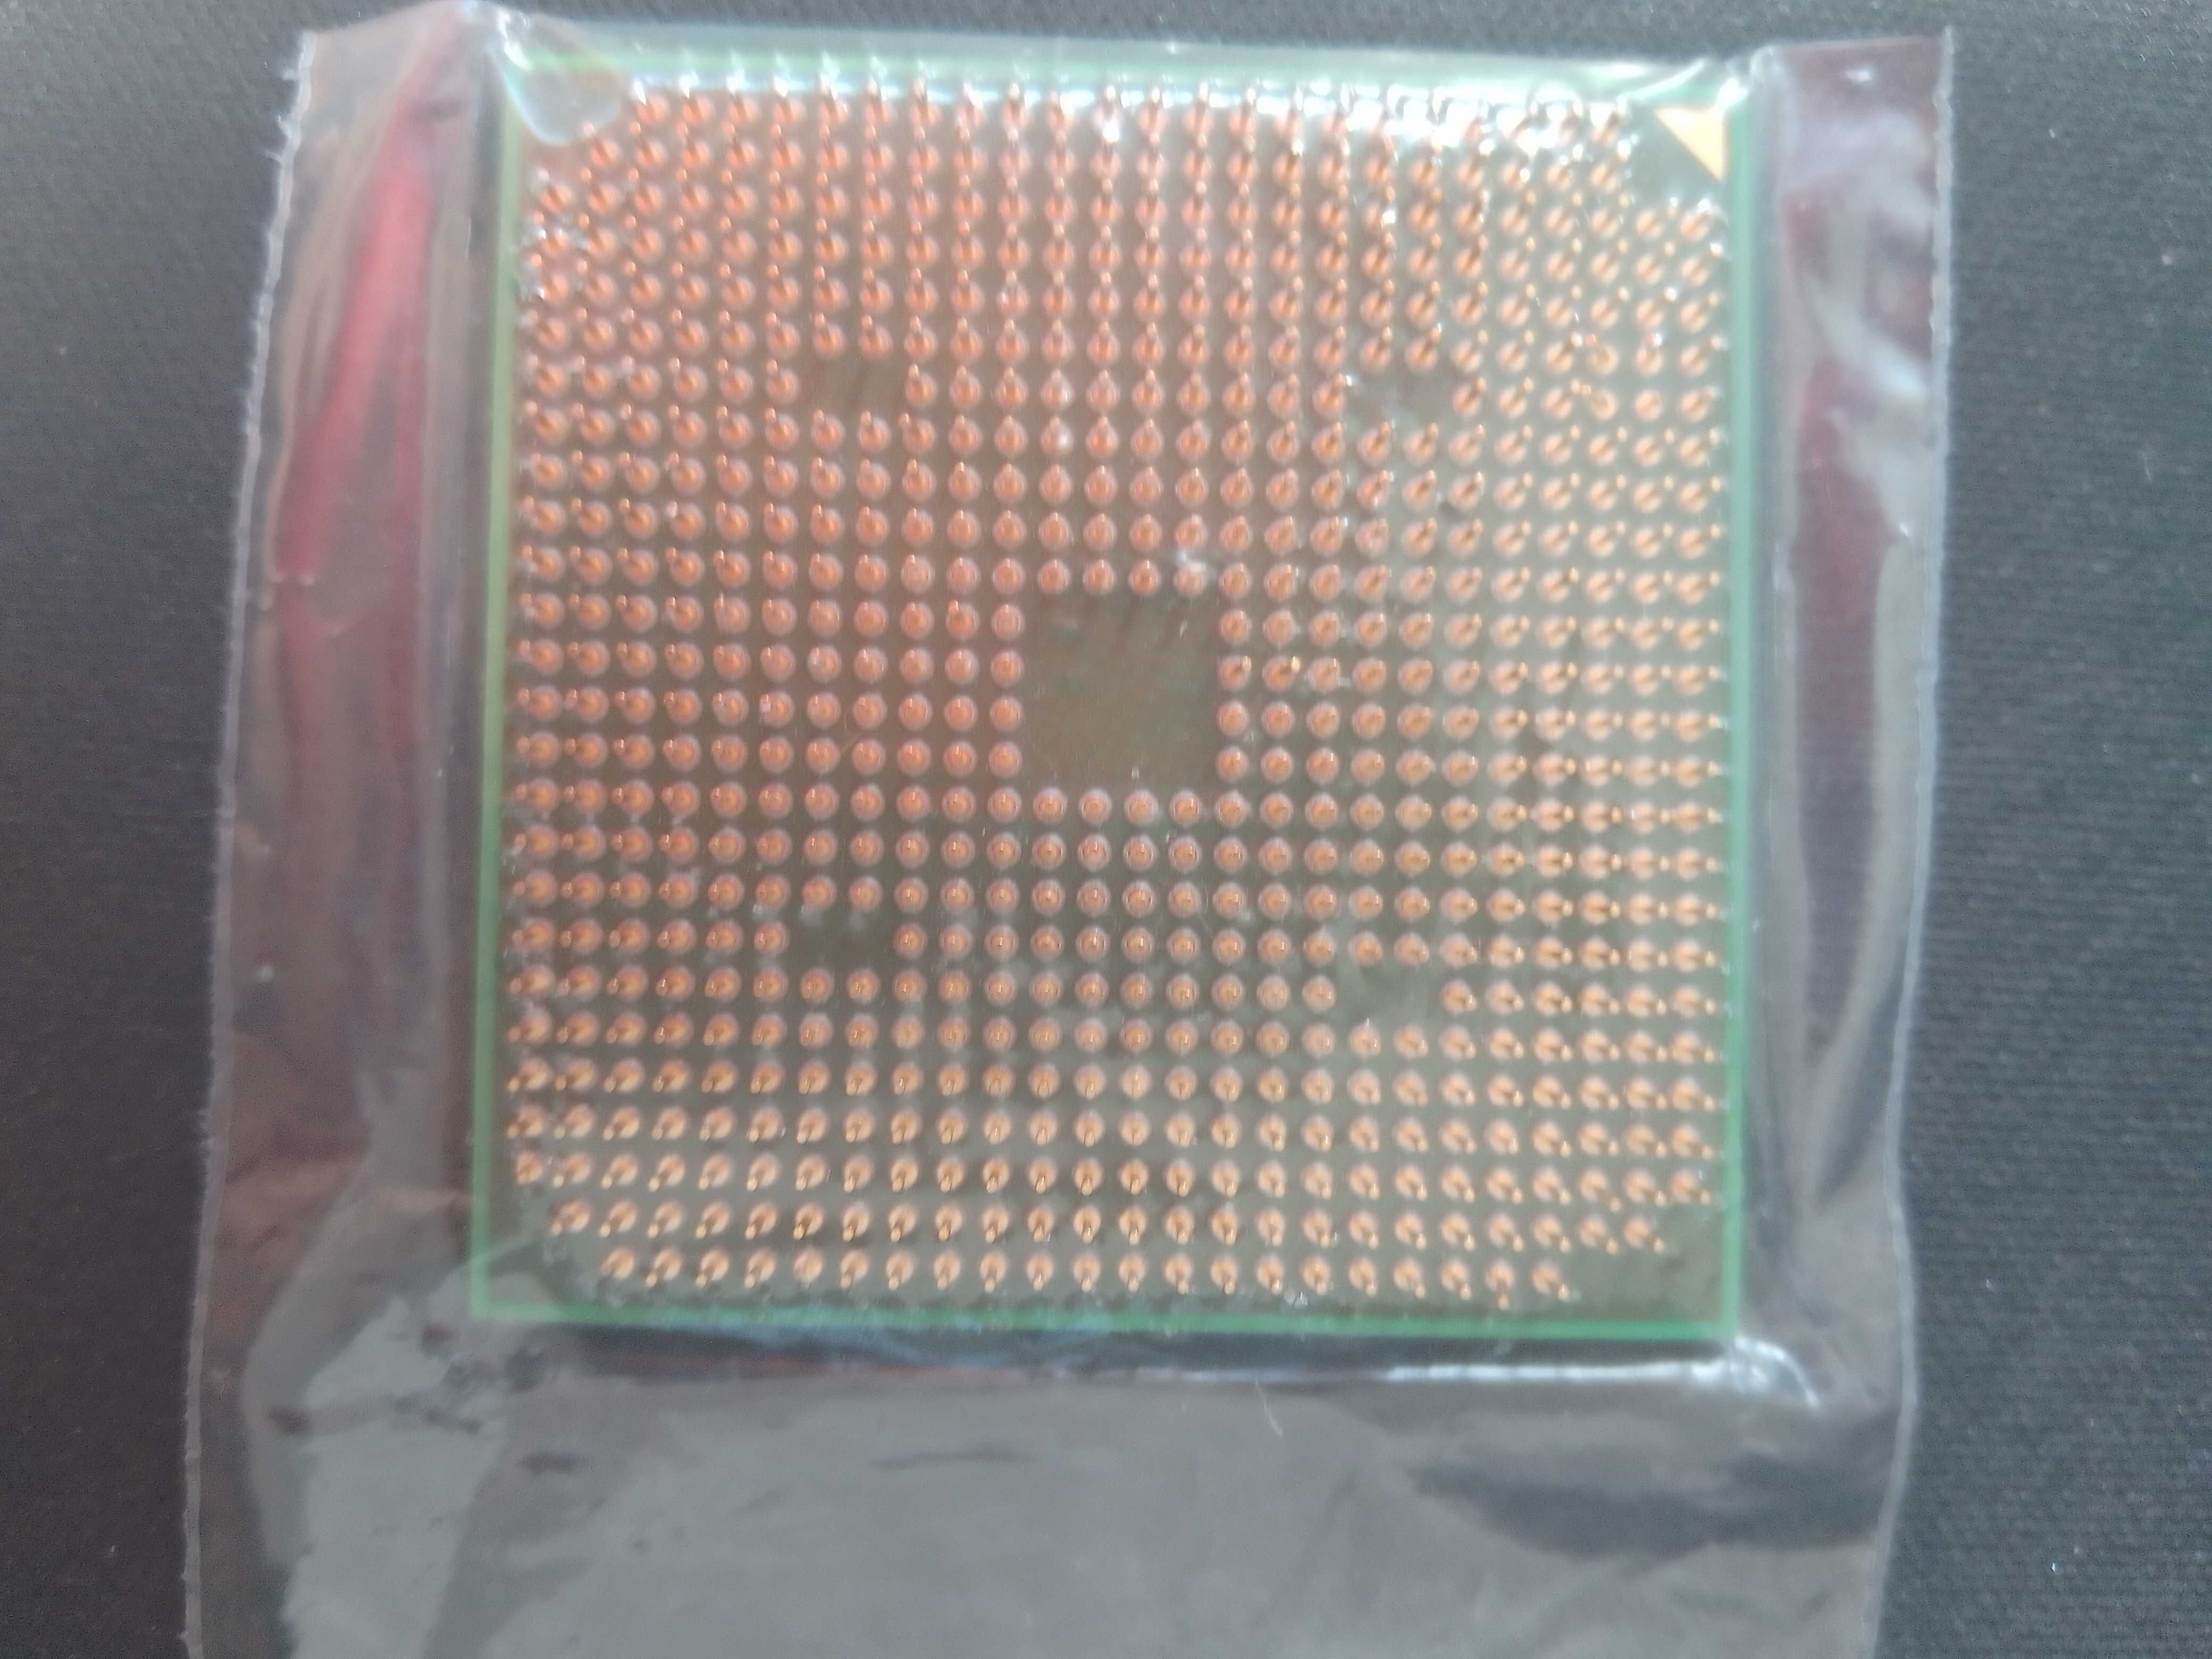 Procesor AMD Athlon 64 x2	AMDTKS7HAX4DM 2r 2w  1.90 GHz (001154)